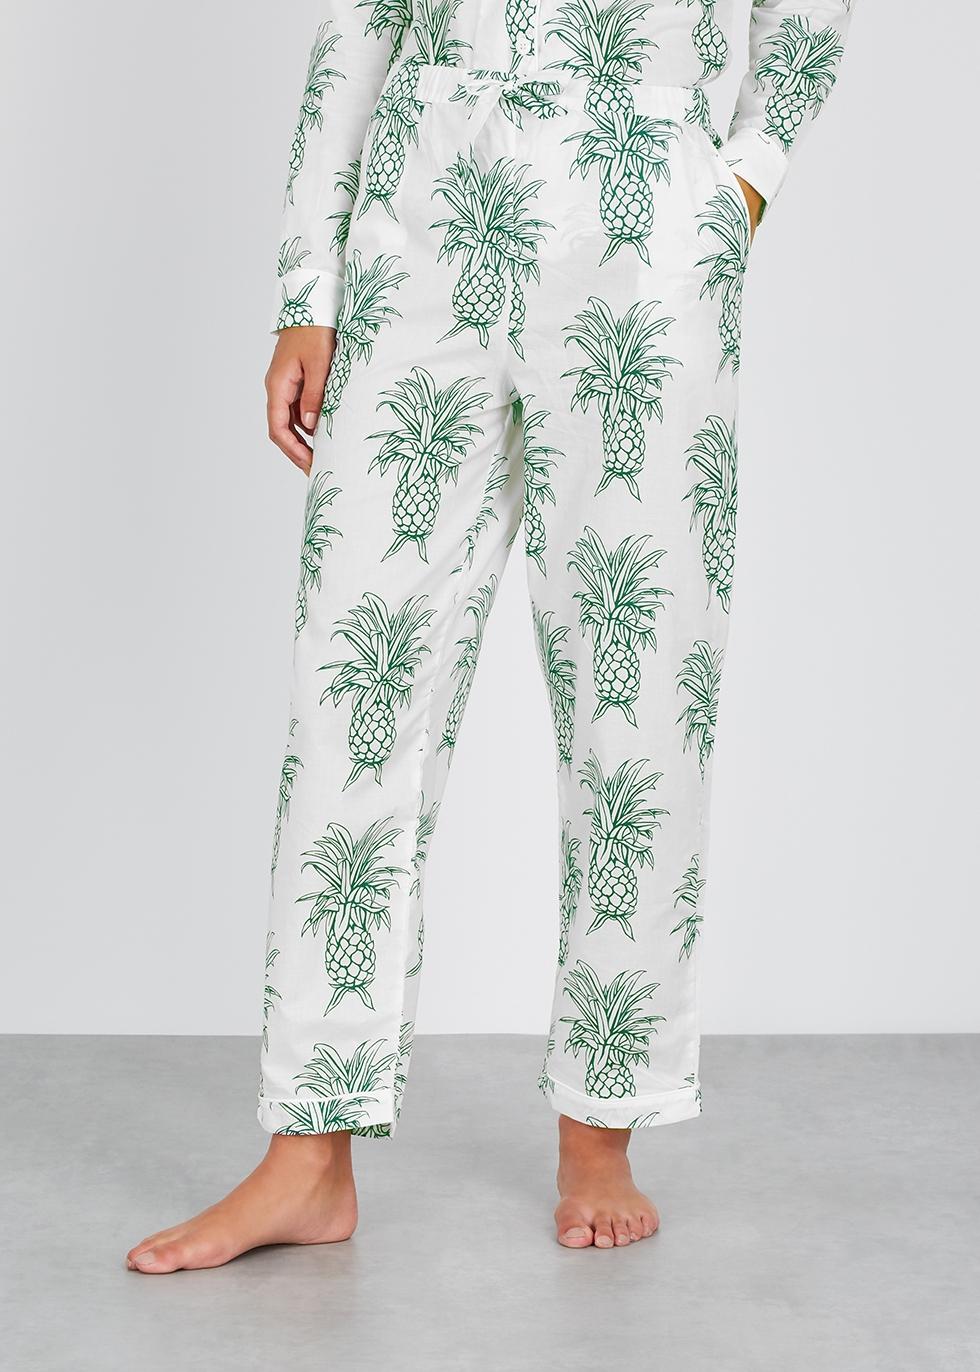 Desmond & Dempsey Howie Printed Organic Cotton Pajama Set in Green 